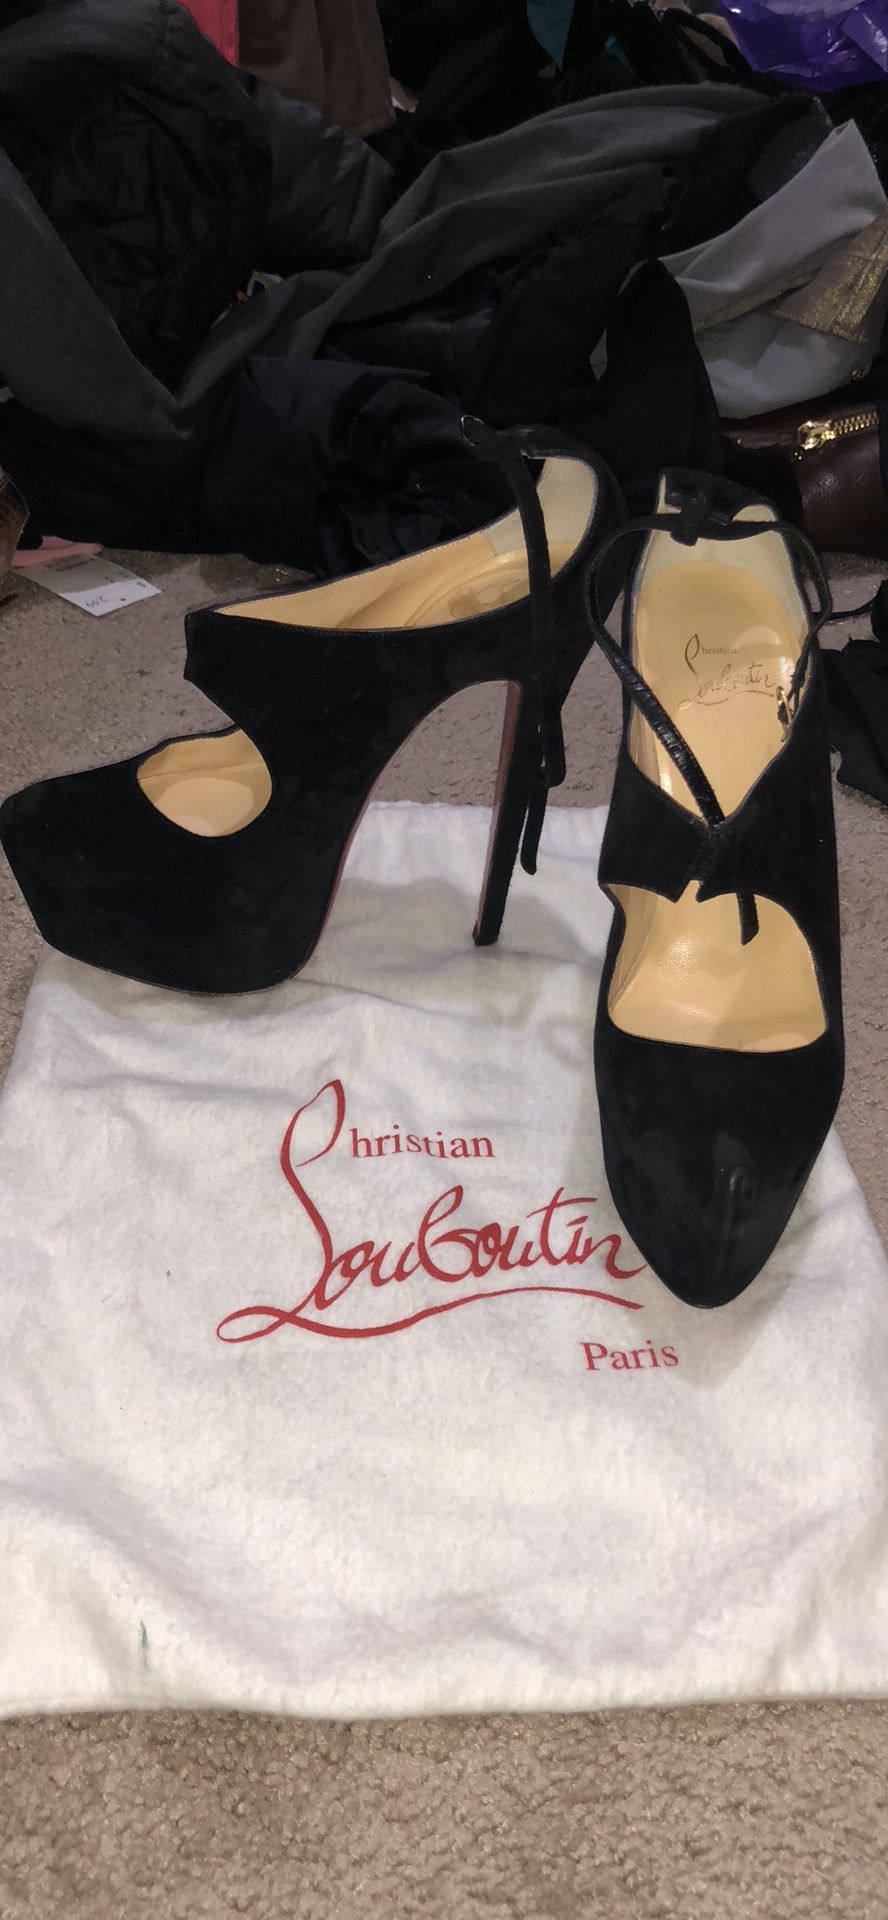 Authentic Christian Louboutin suede Platform heels shoes size EU 37 or US 6 1/2